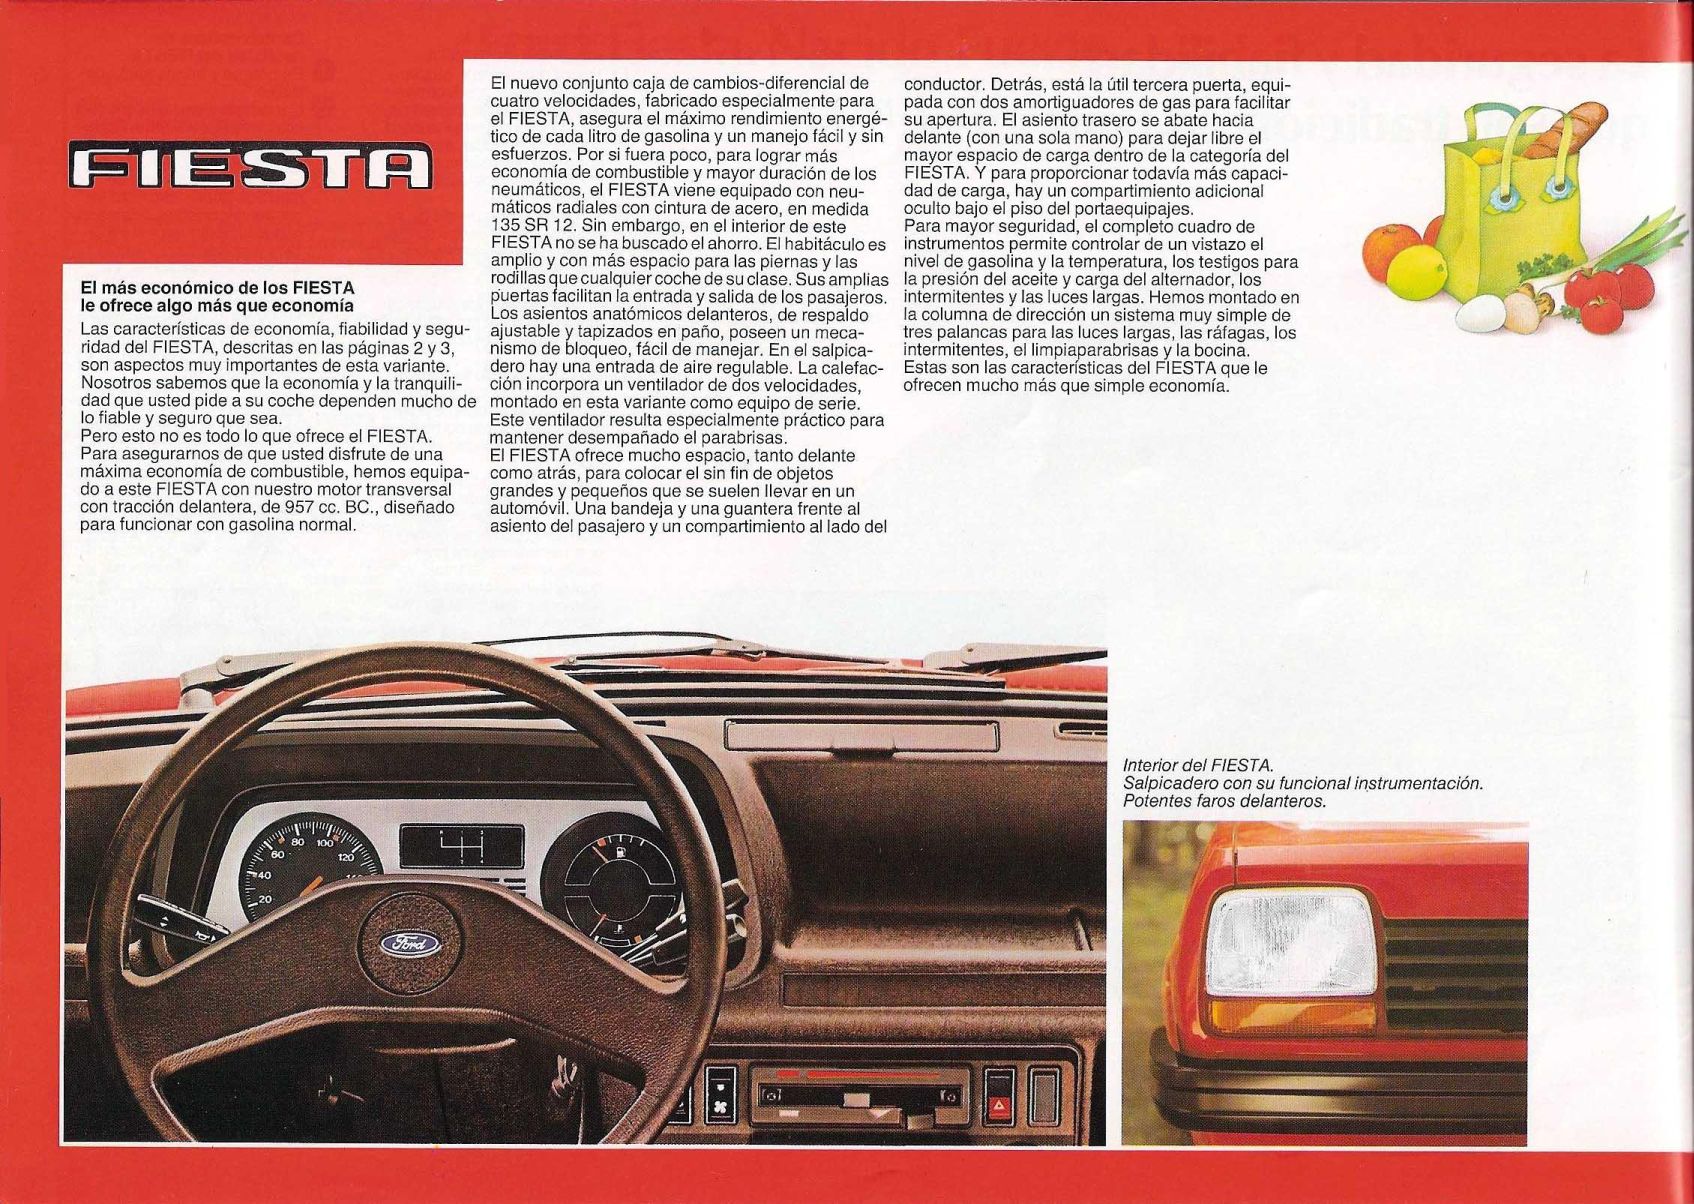 1979 Ford Fiesta brochure